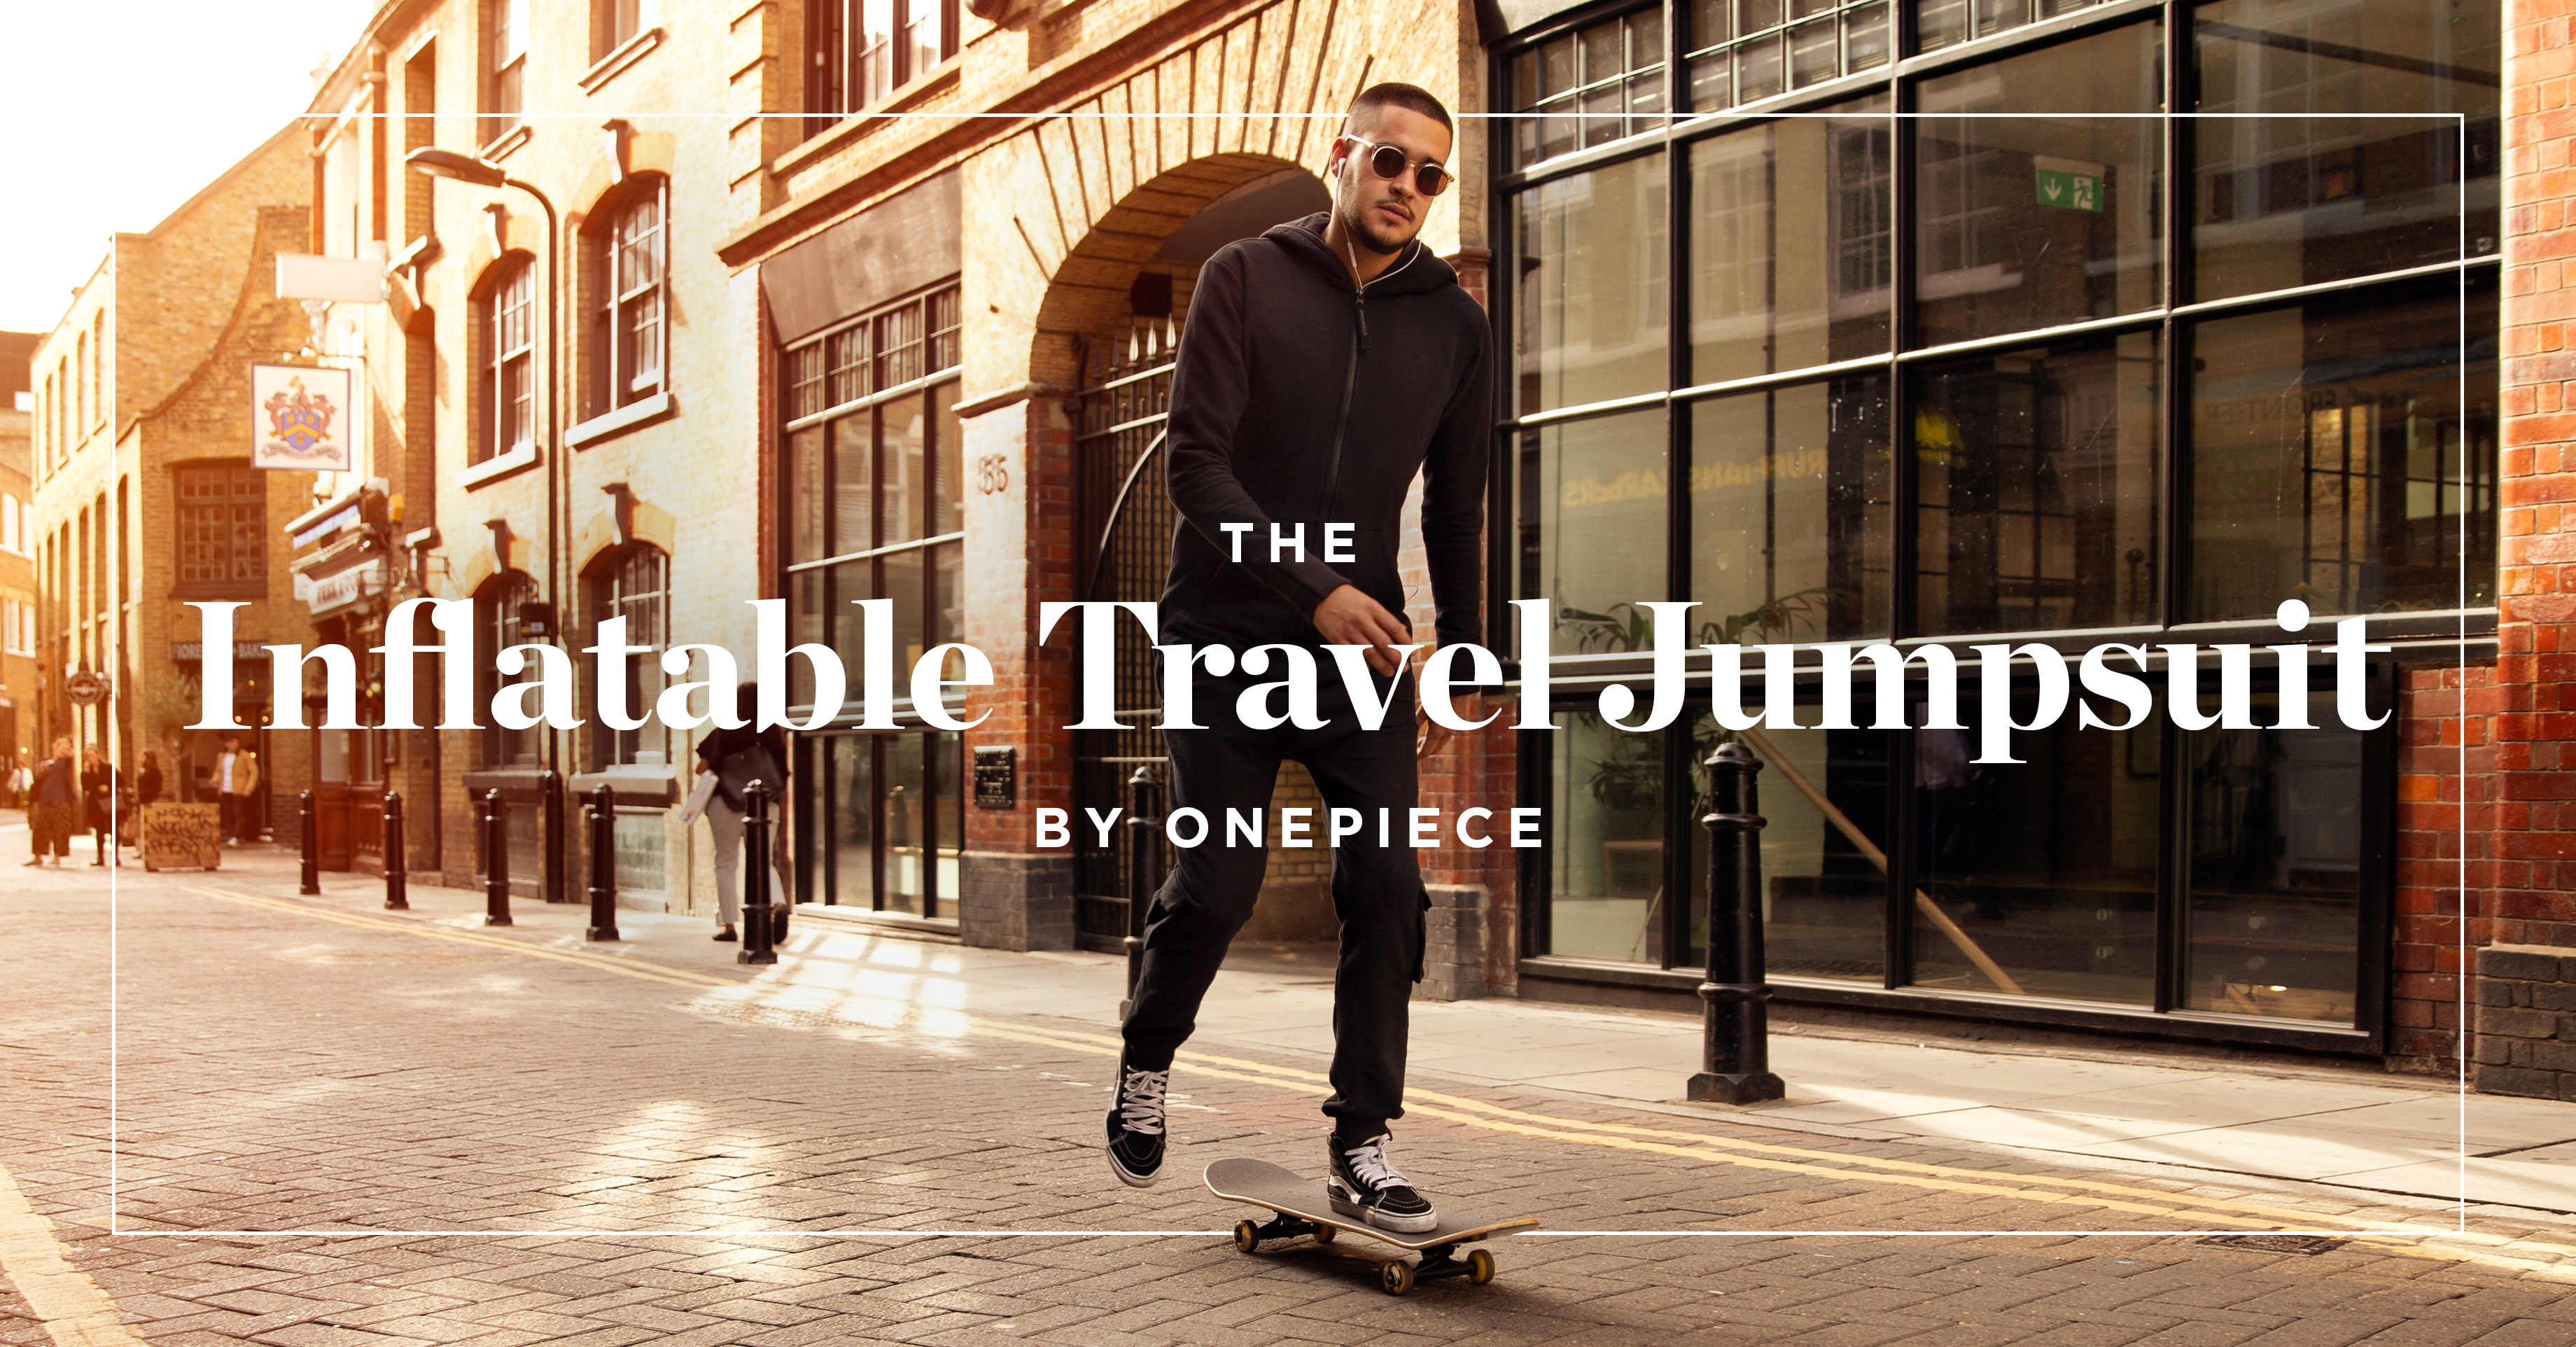 onepiece jumpsuit travel